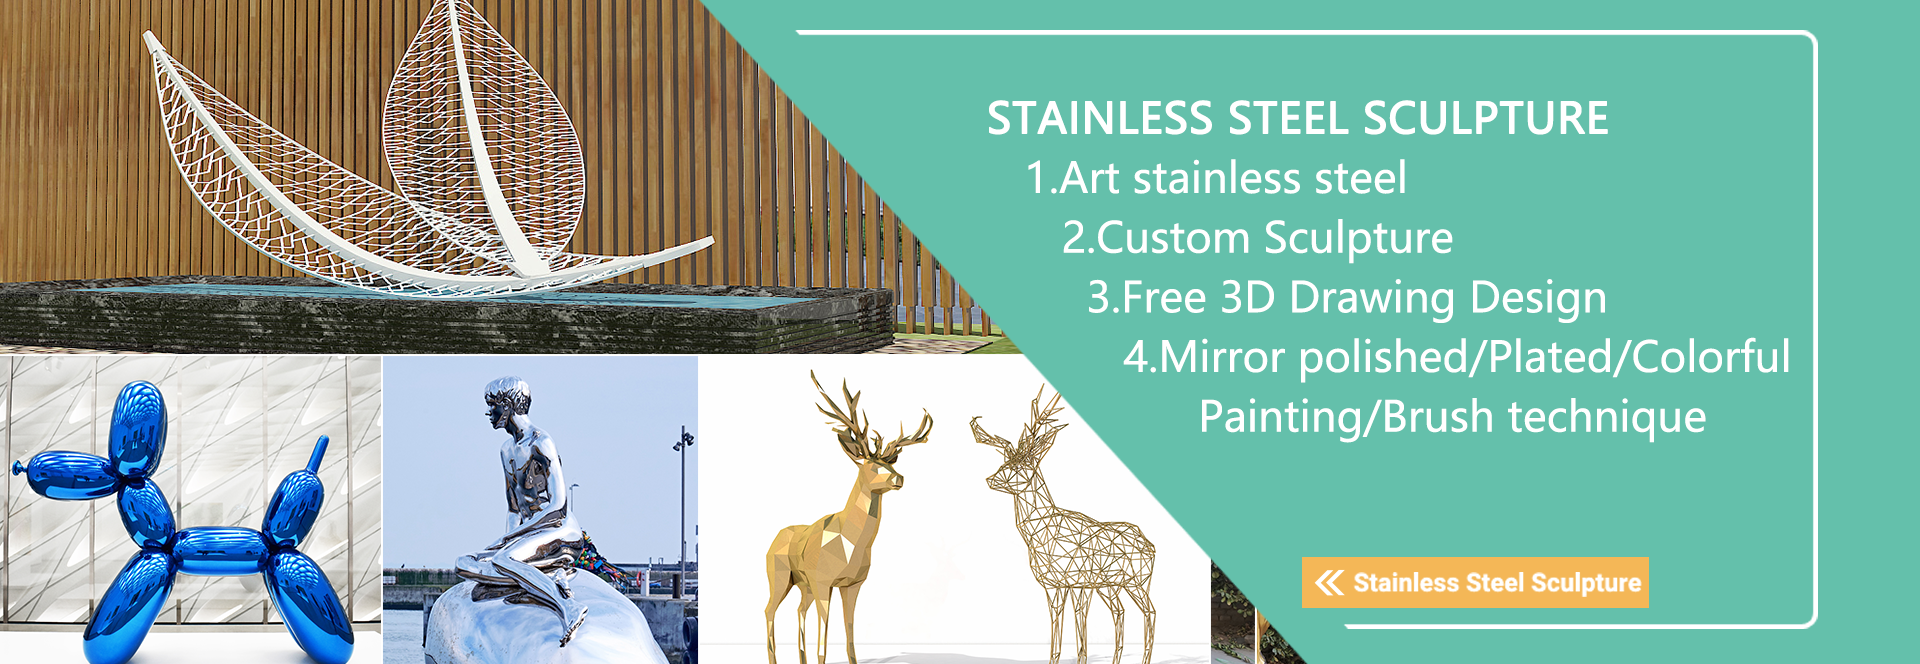 stainlss steel sculpture